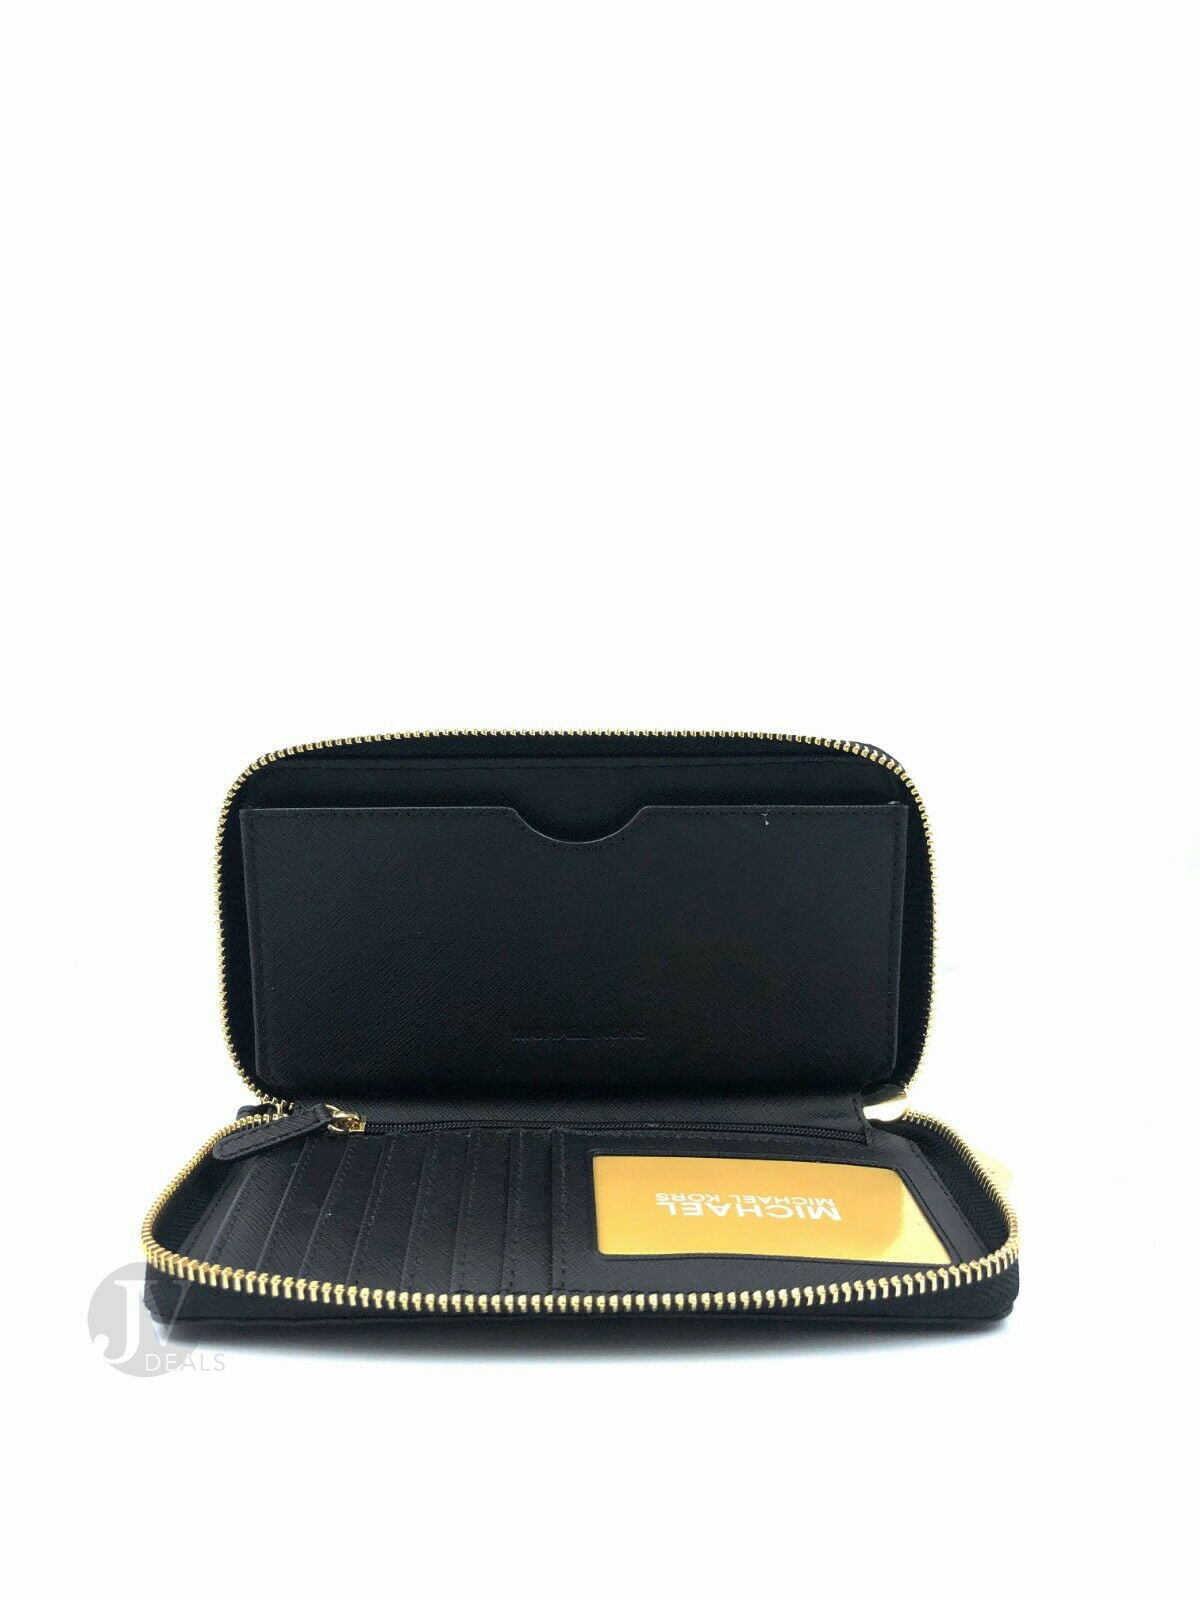 Michael Kors Jet Set Travel Large Phone Case Wristlet Wallet MK Mulberry  Multi